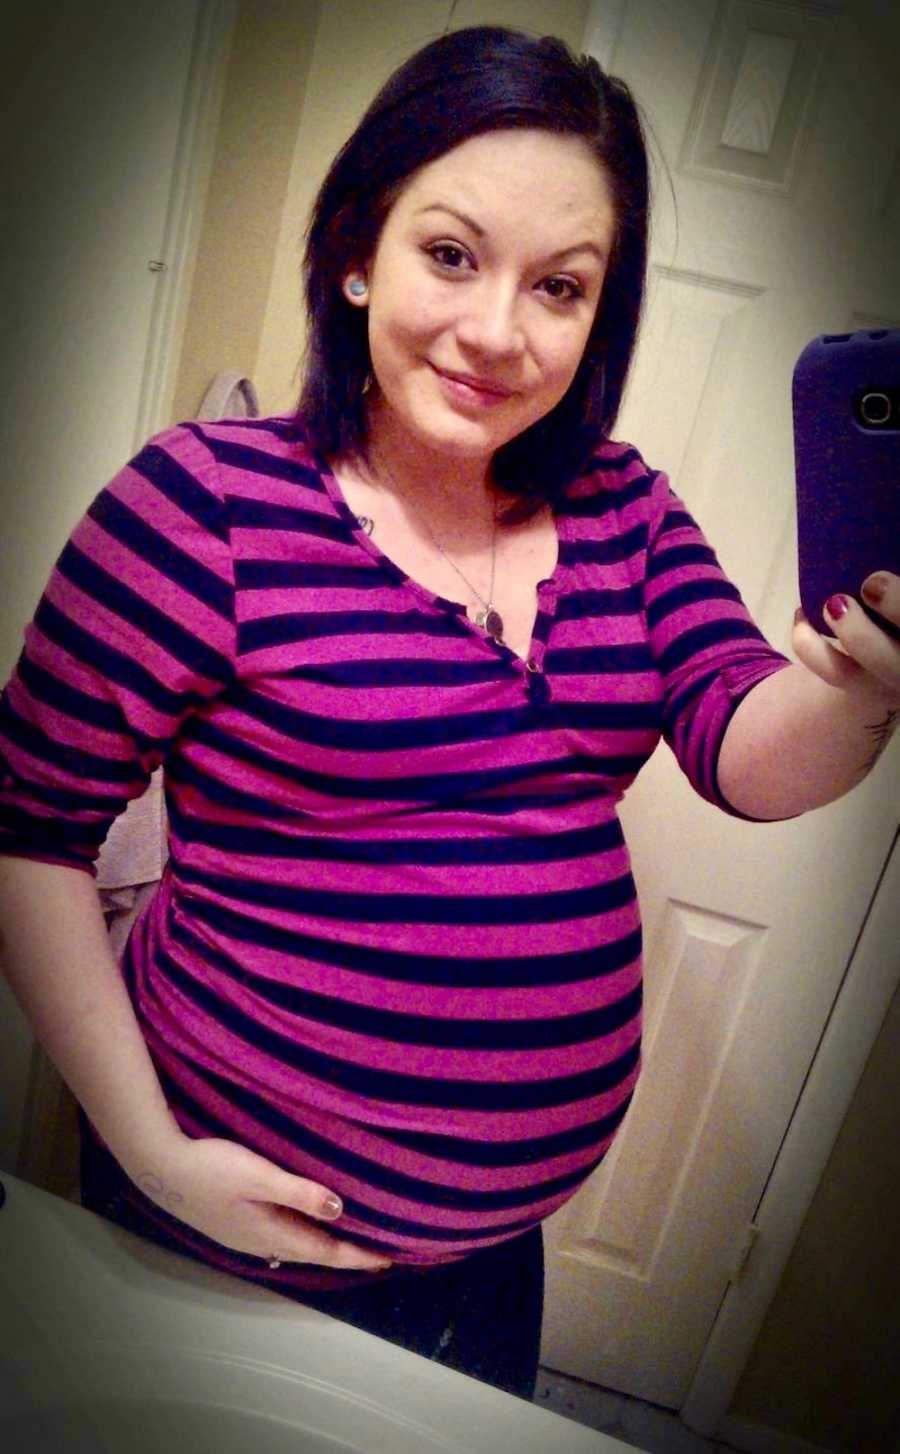 Pregnant woman smiles in mirror selfie